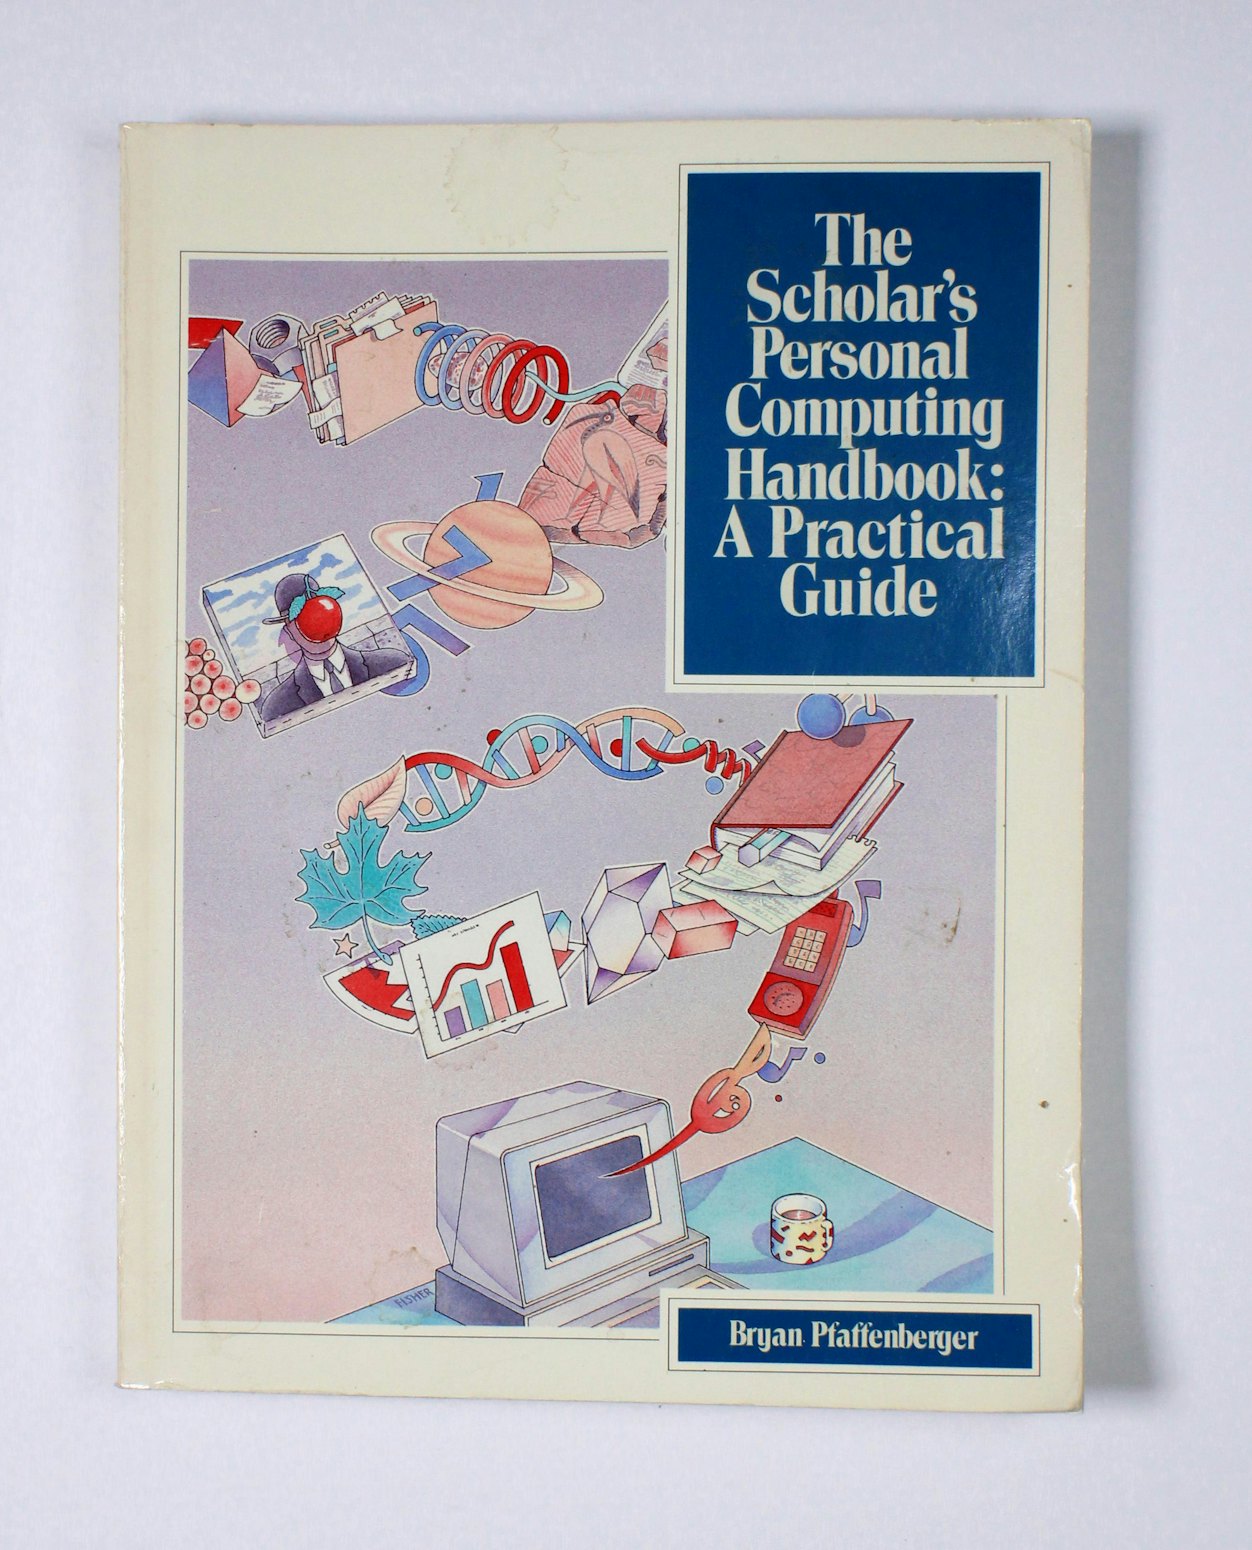 The Scholar’s Personal Computing Handbook: A Practical Guide